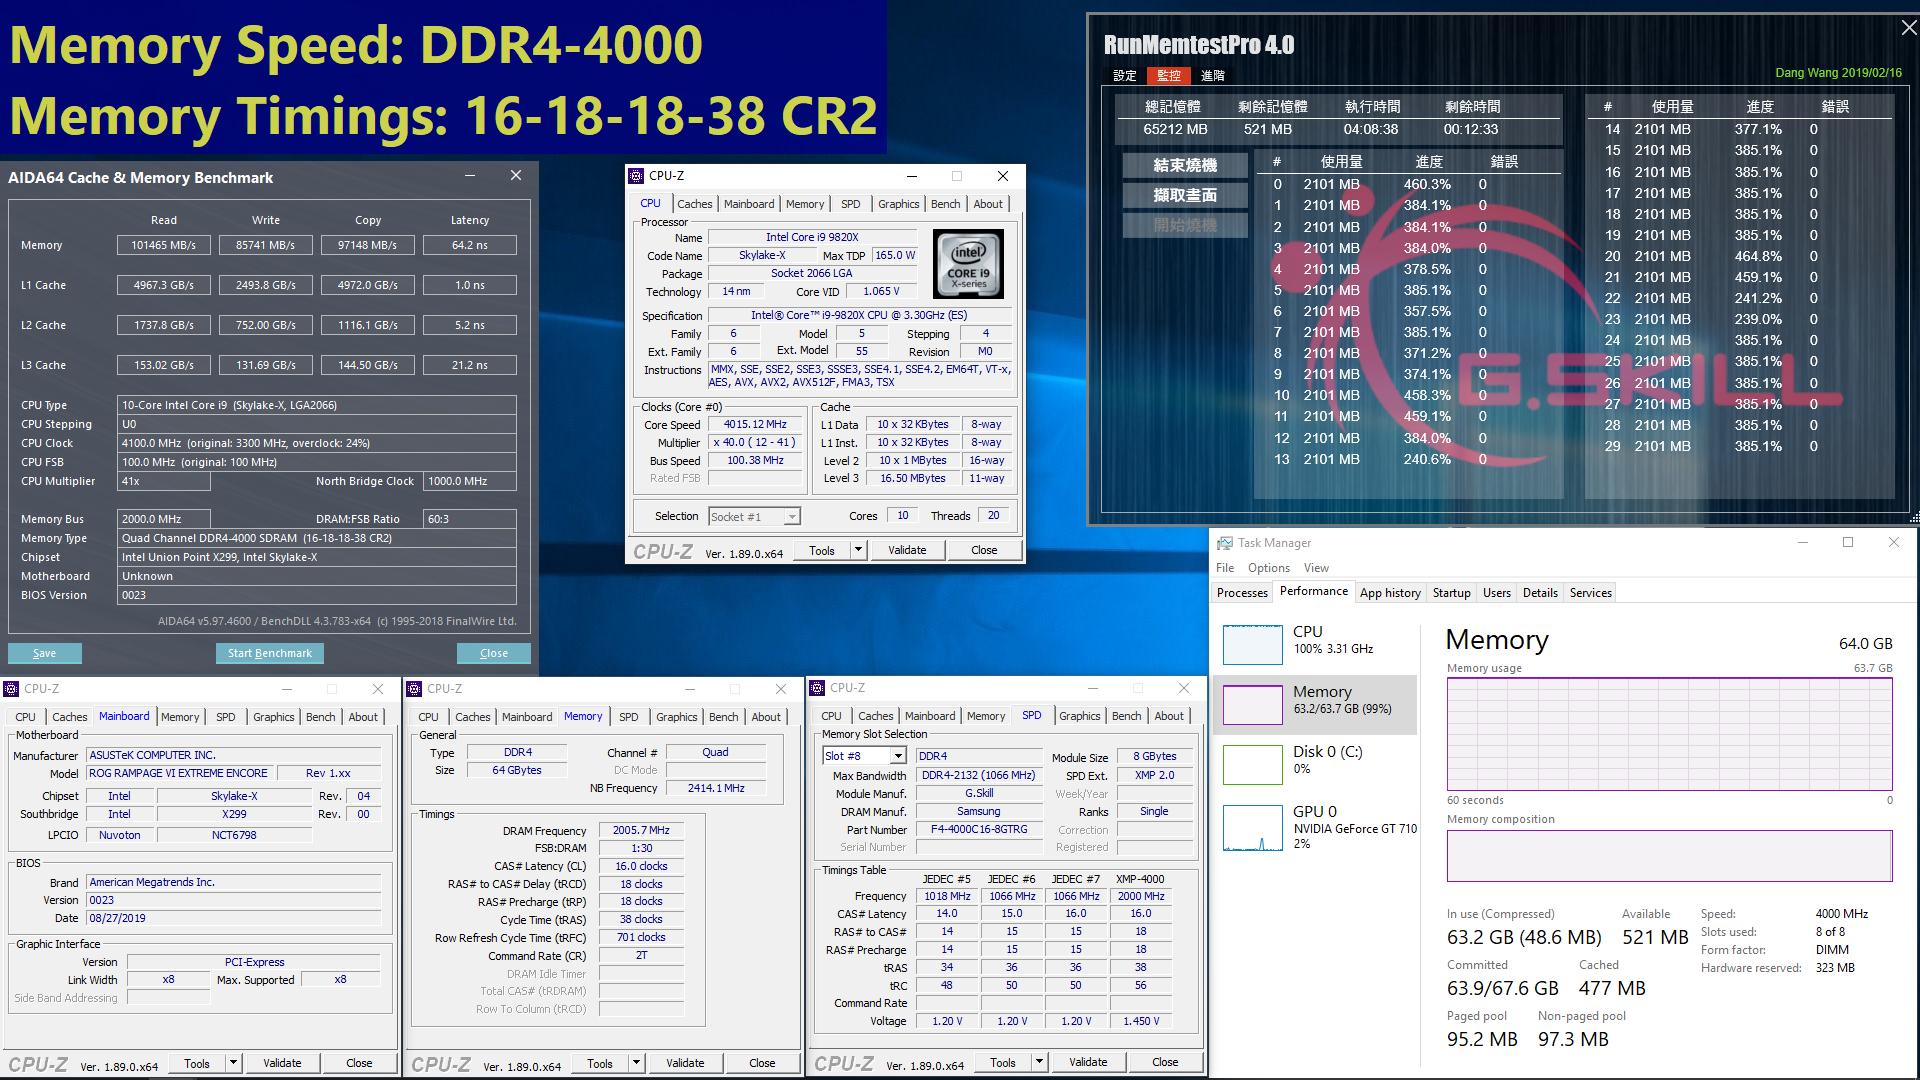 tzroyal 4000 c16 64gb G.SKILL เปิดตัวแรมรุ่นใหม่ล่าสุด G.SKILL Trident Z Royal DDR4 4300 CL19 และ DDR4 4000 CL16 64GB (8GBx8) แบบ Quad Channel สองรุ่น Royal Gold และ Royal Silver ที่ใช้งานกับแพลตฟอร์ม Intel X299 